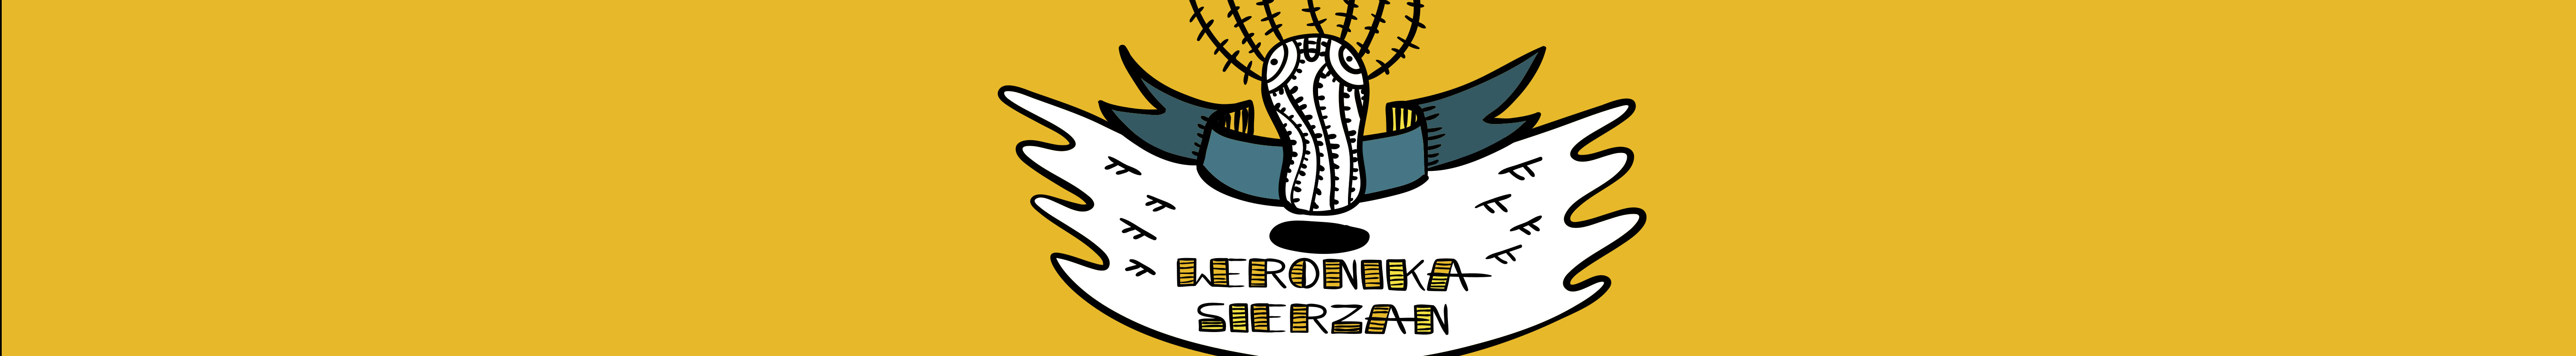 Weronika Sierzan's profile banner